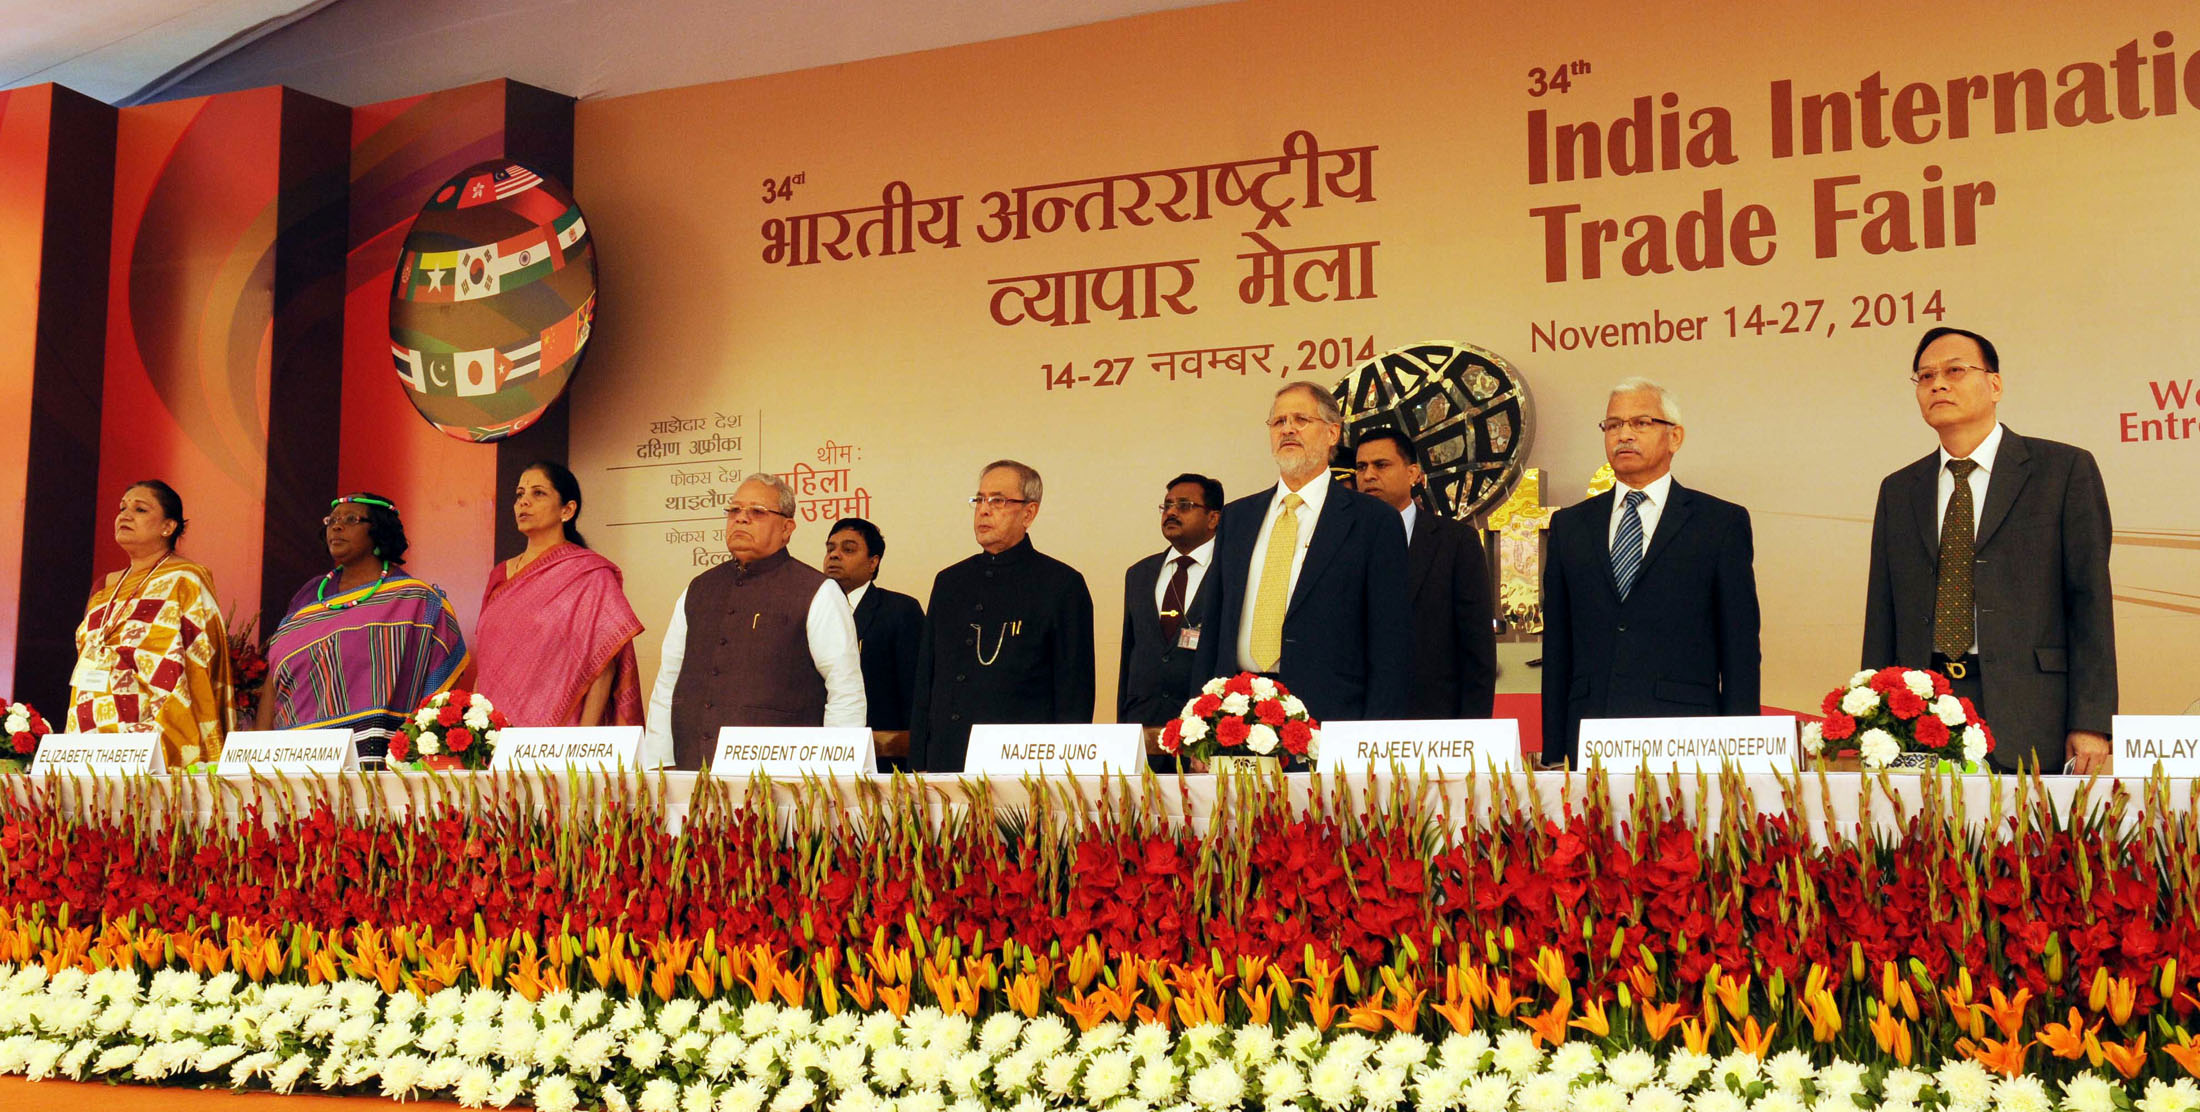 Inauguration of the 34th India International Trade Fair